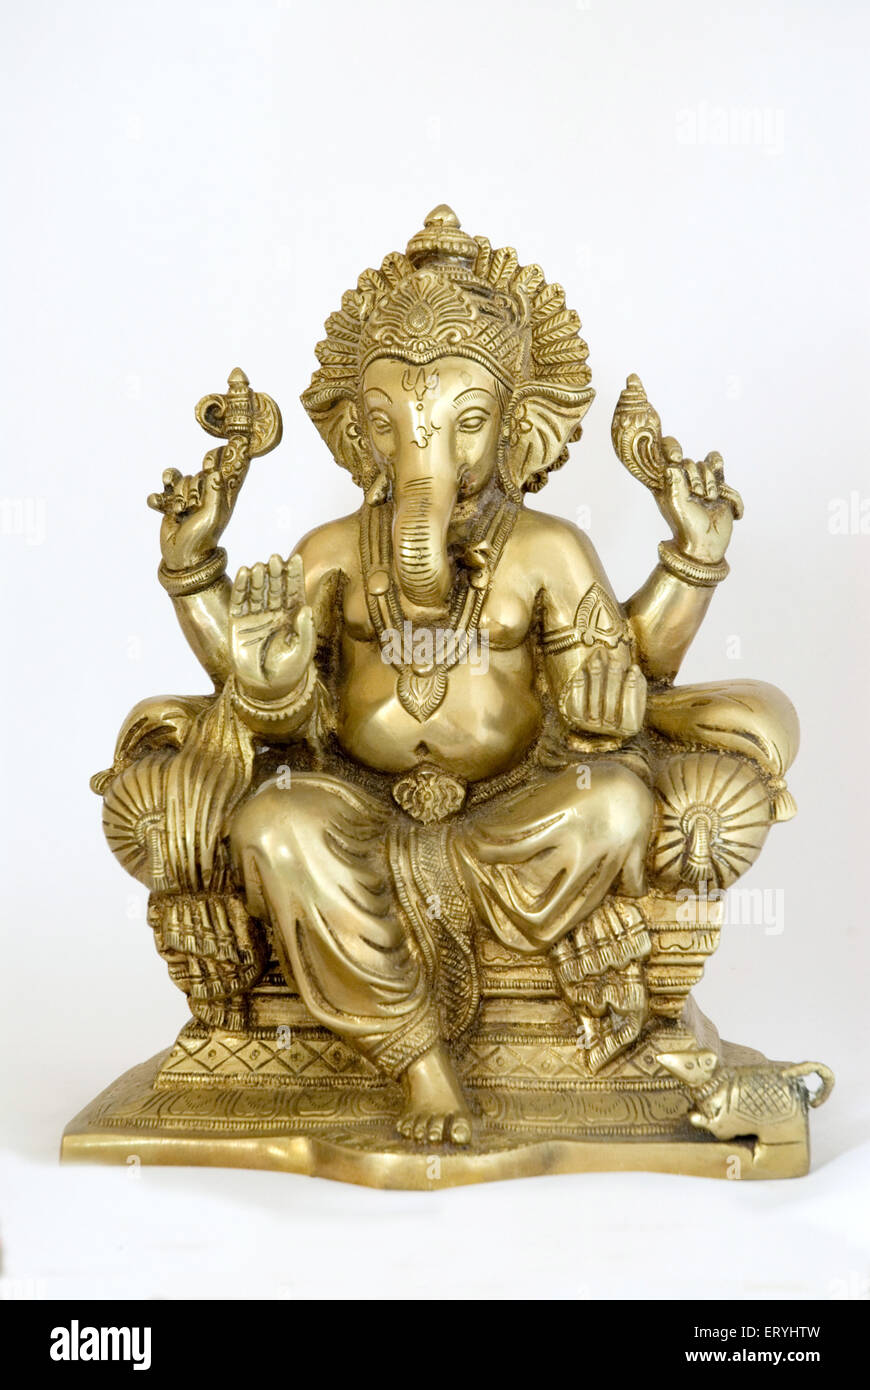 Brass statue of lord Ganesha elephant headed god ; India Stock Photo